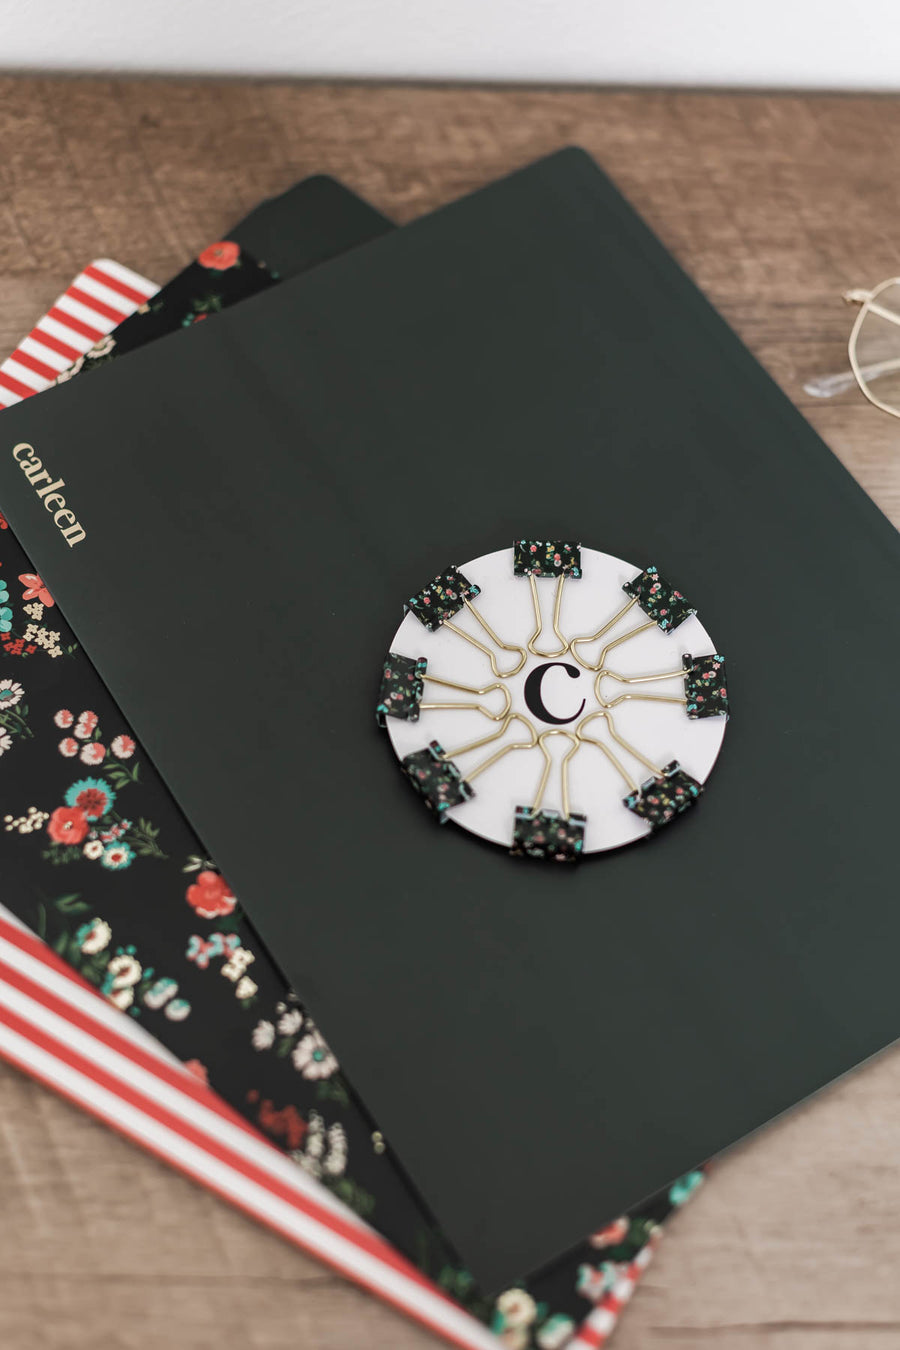 Decorative Binder Clip Pack - Floral Print